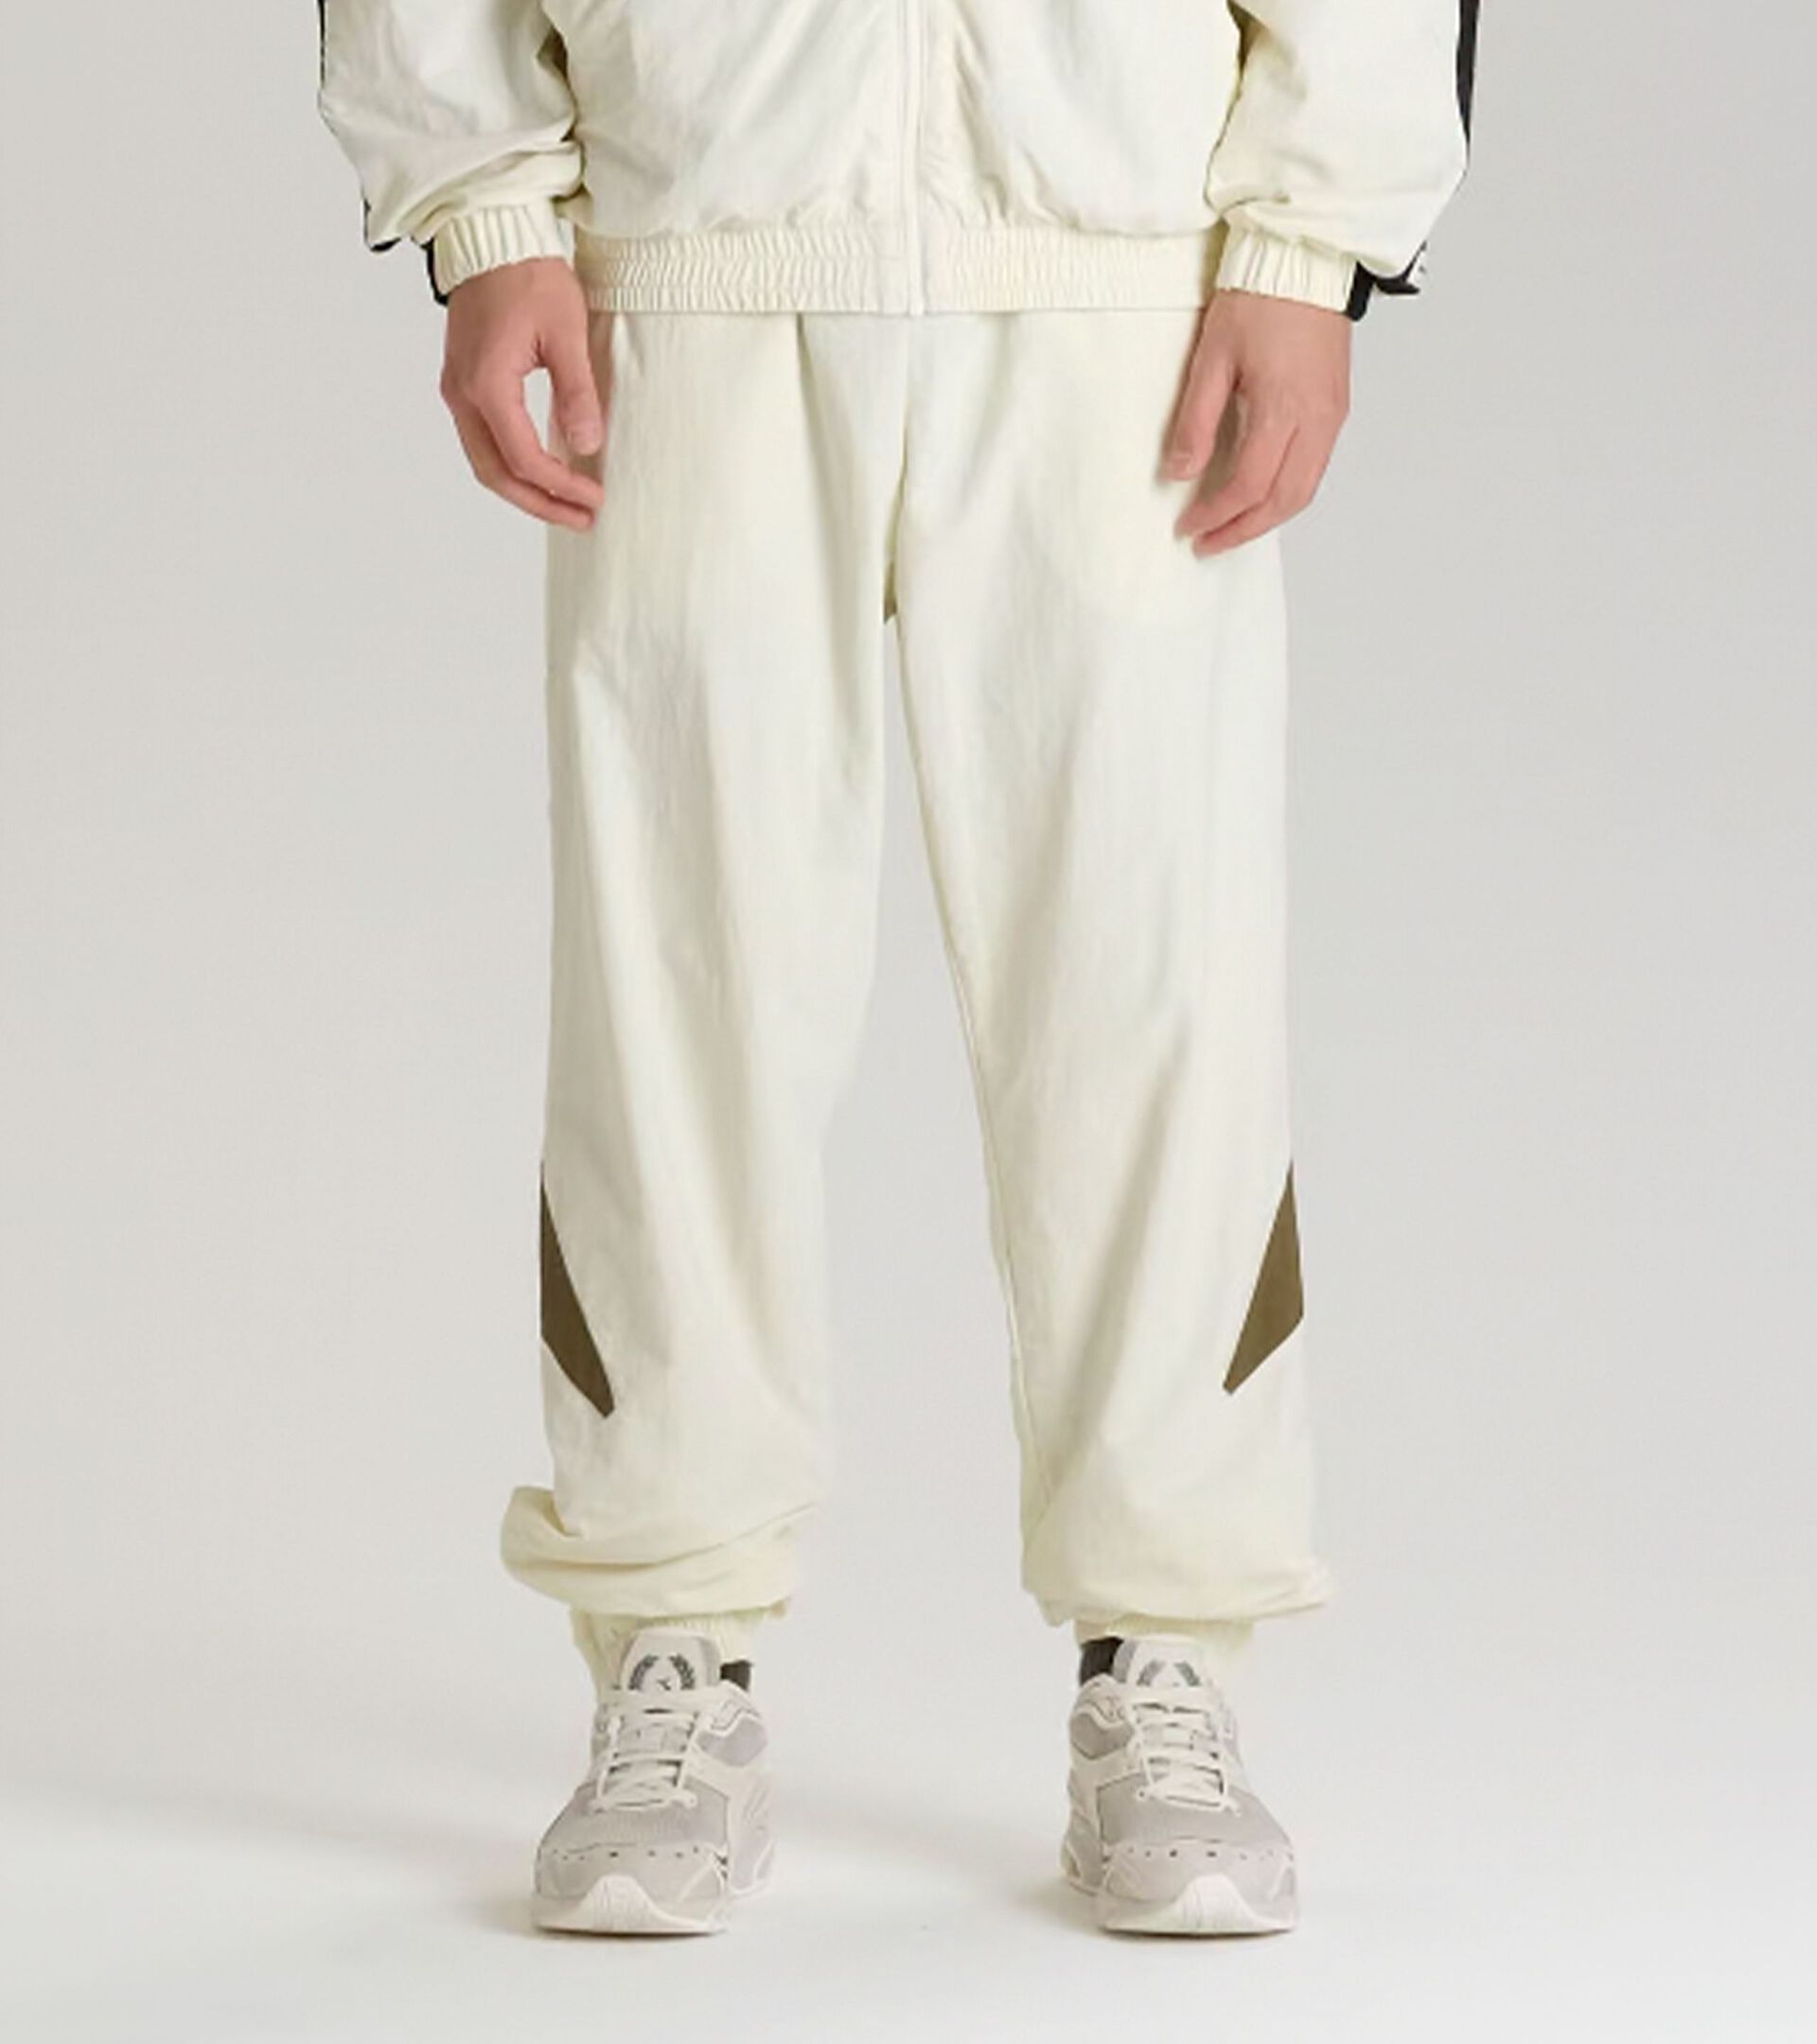 Pantalones deportivos - Made in Italy - Gender neutral TRACK PANTS LEGACY BLANCO MURMURAR - Diadora